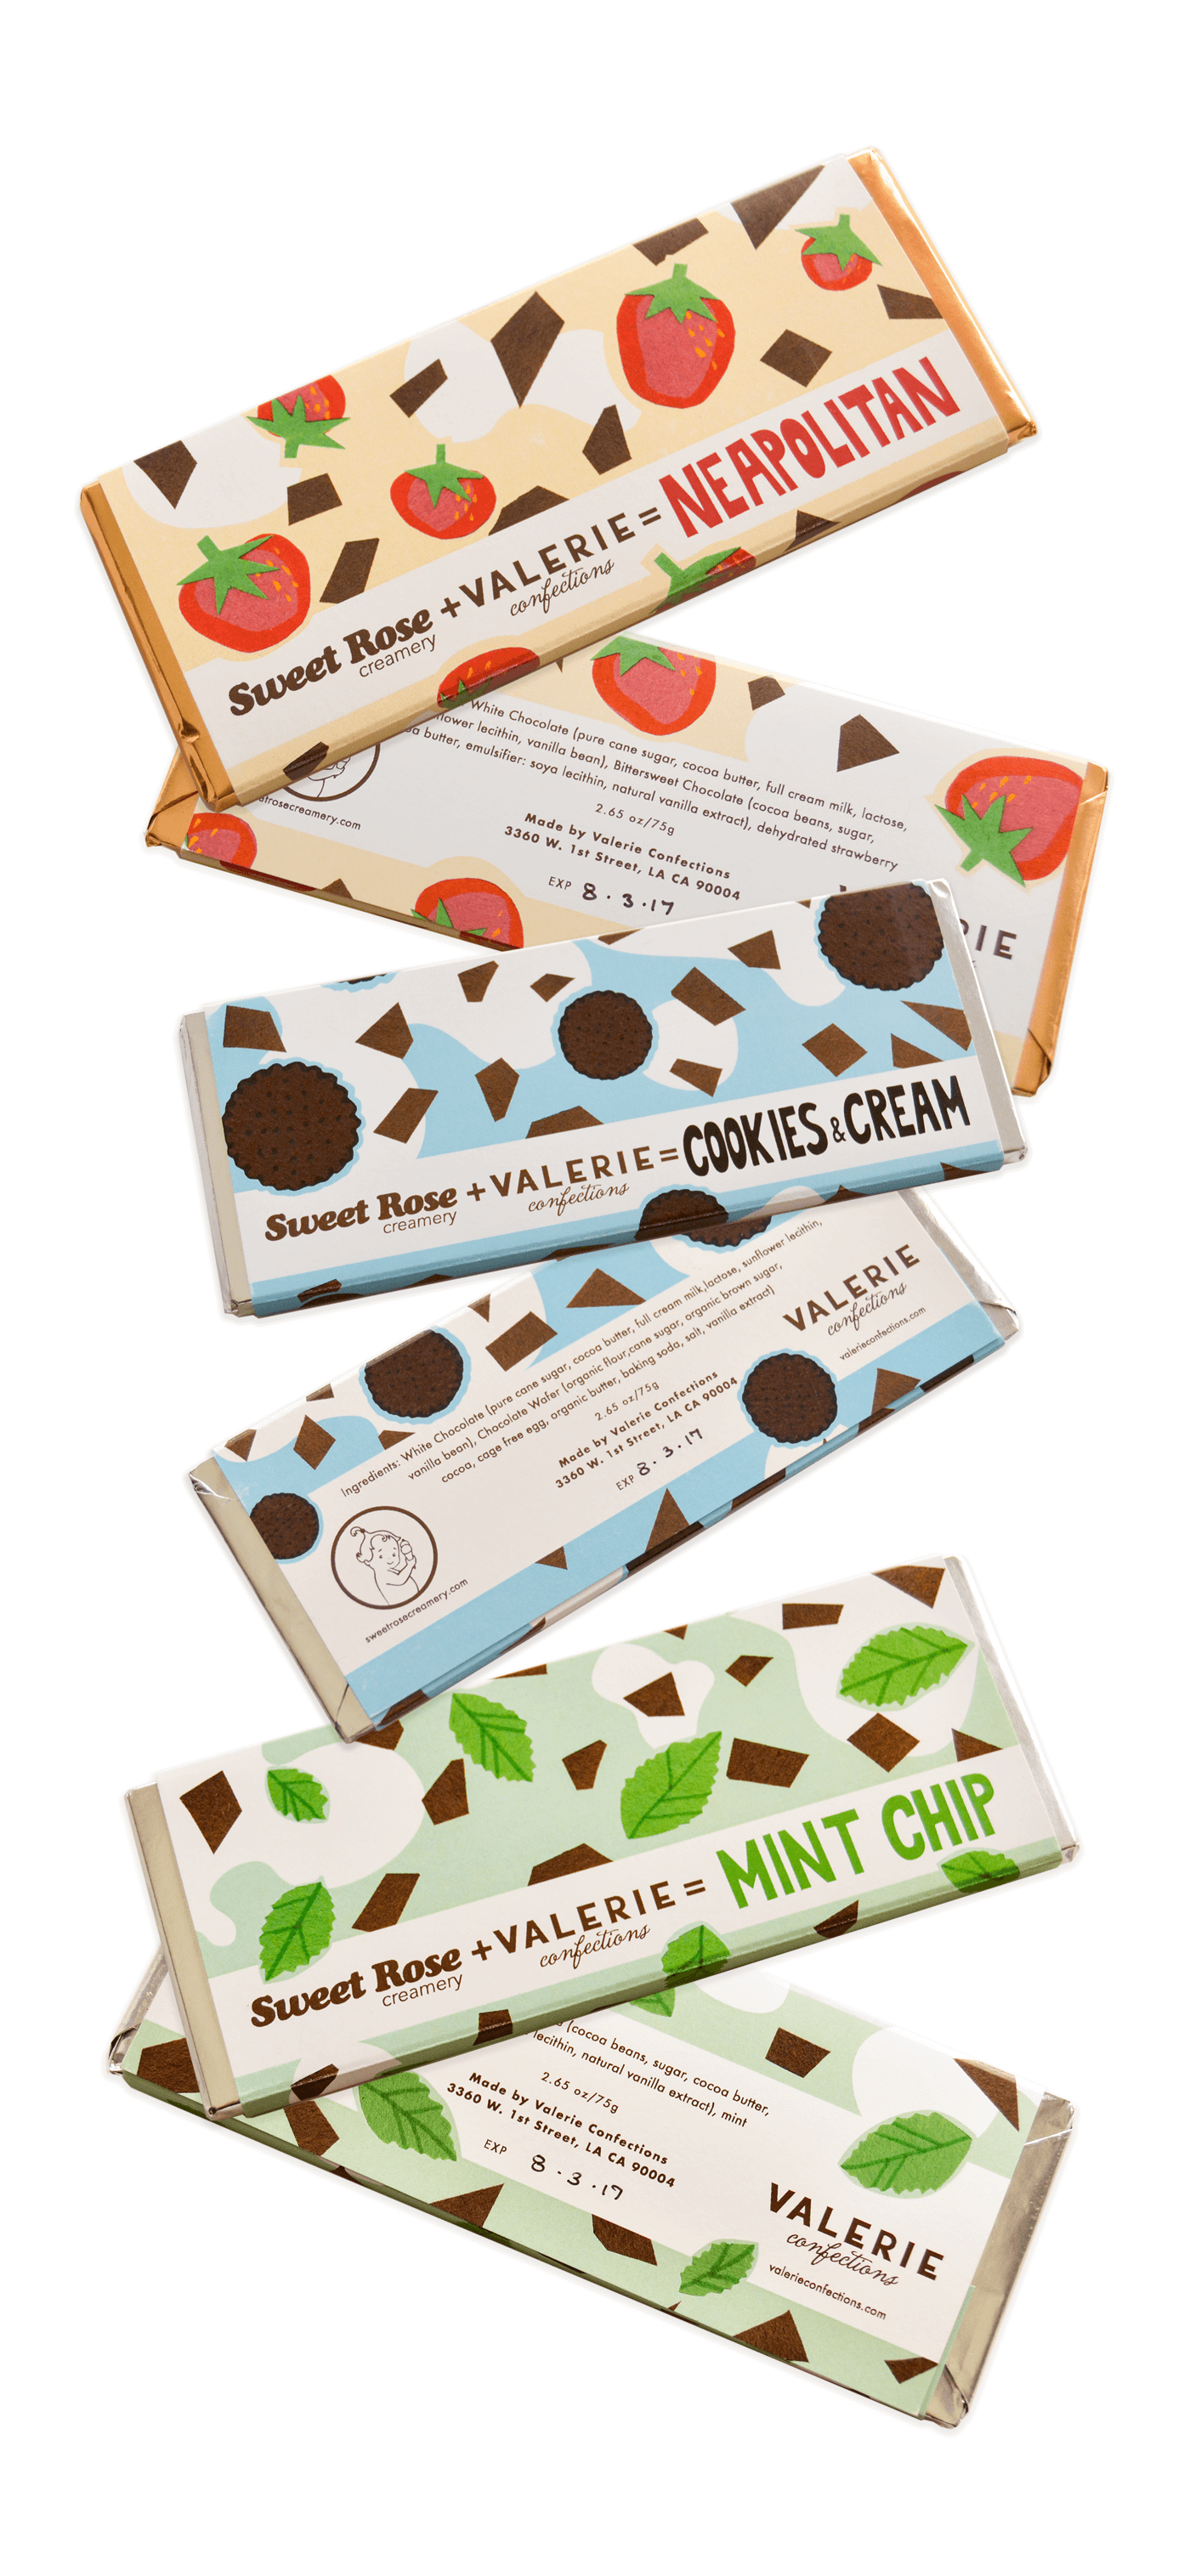 Sweet Rose Creamery ice cream pints package design